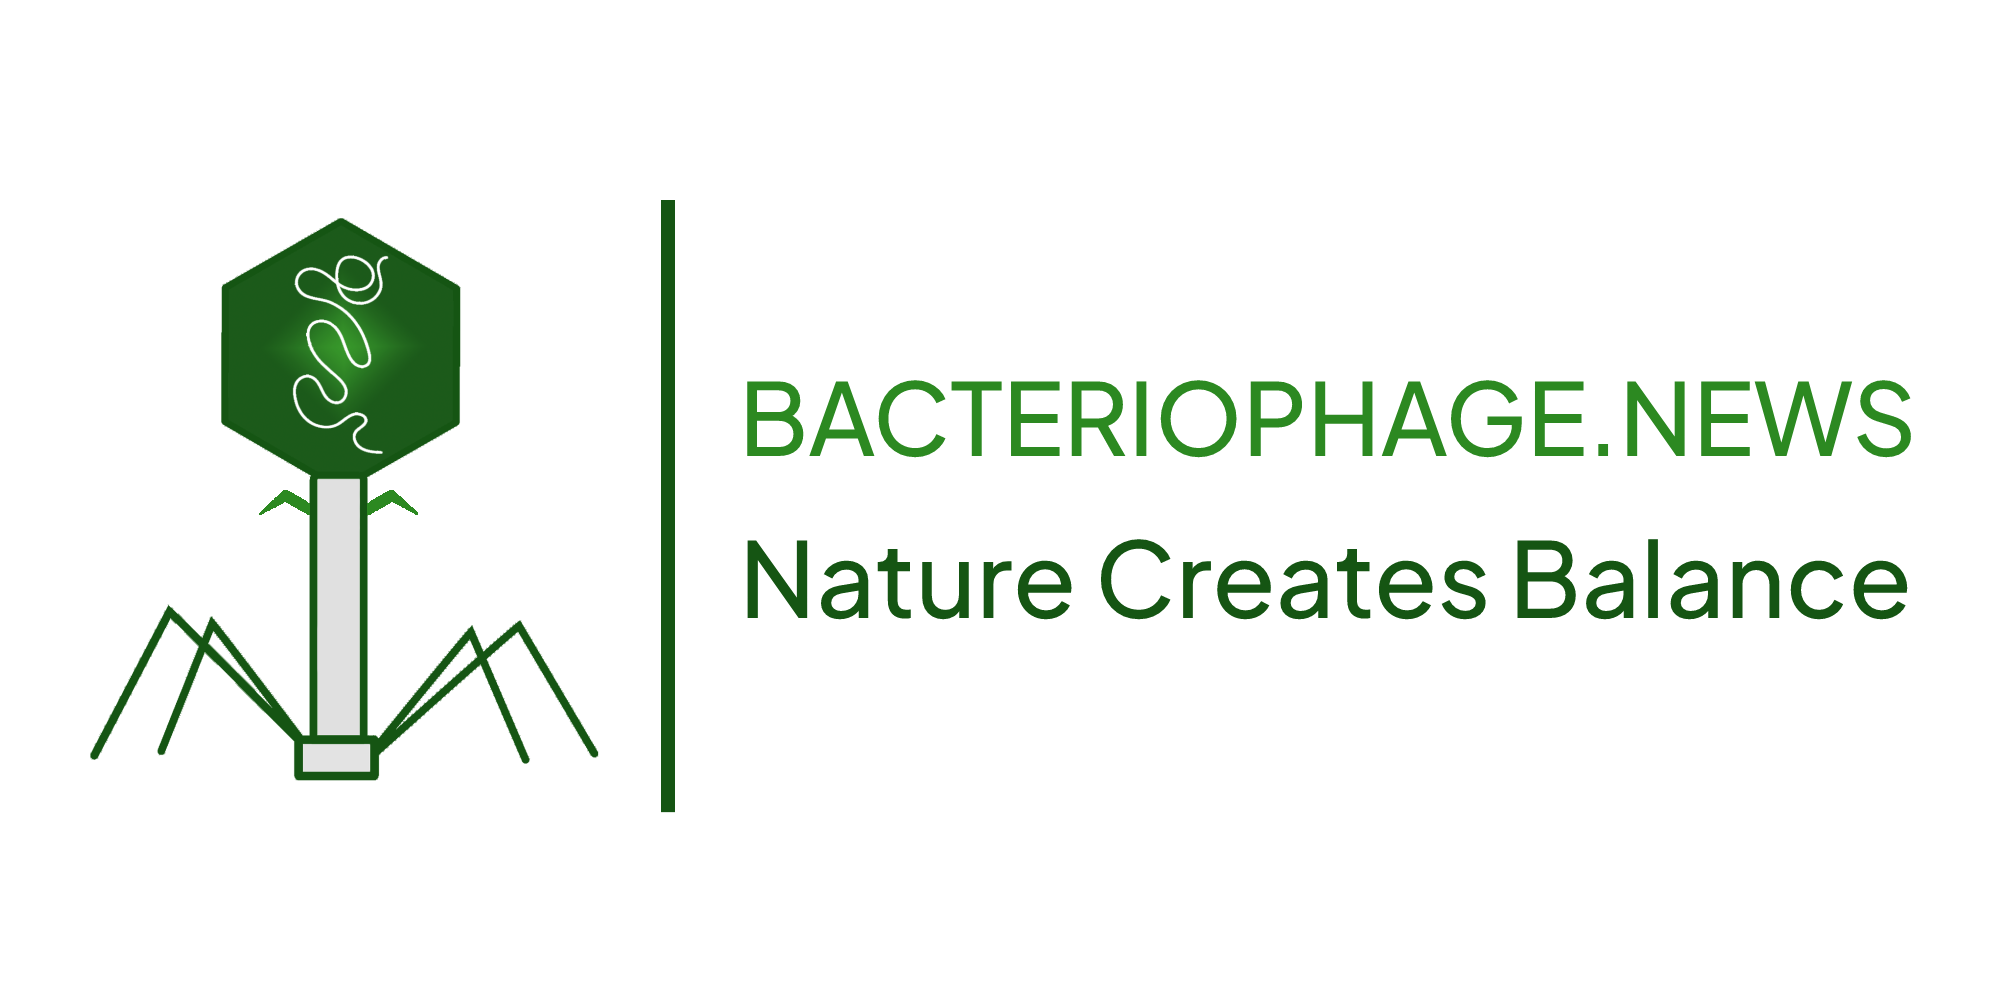 Bacteriophage news logo 2000x1000 dark